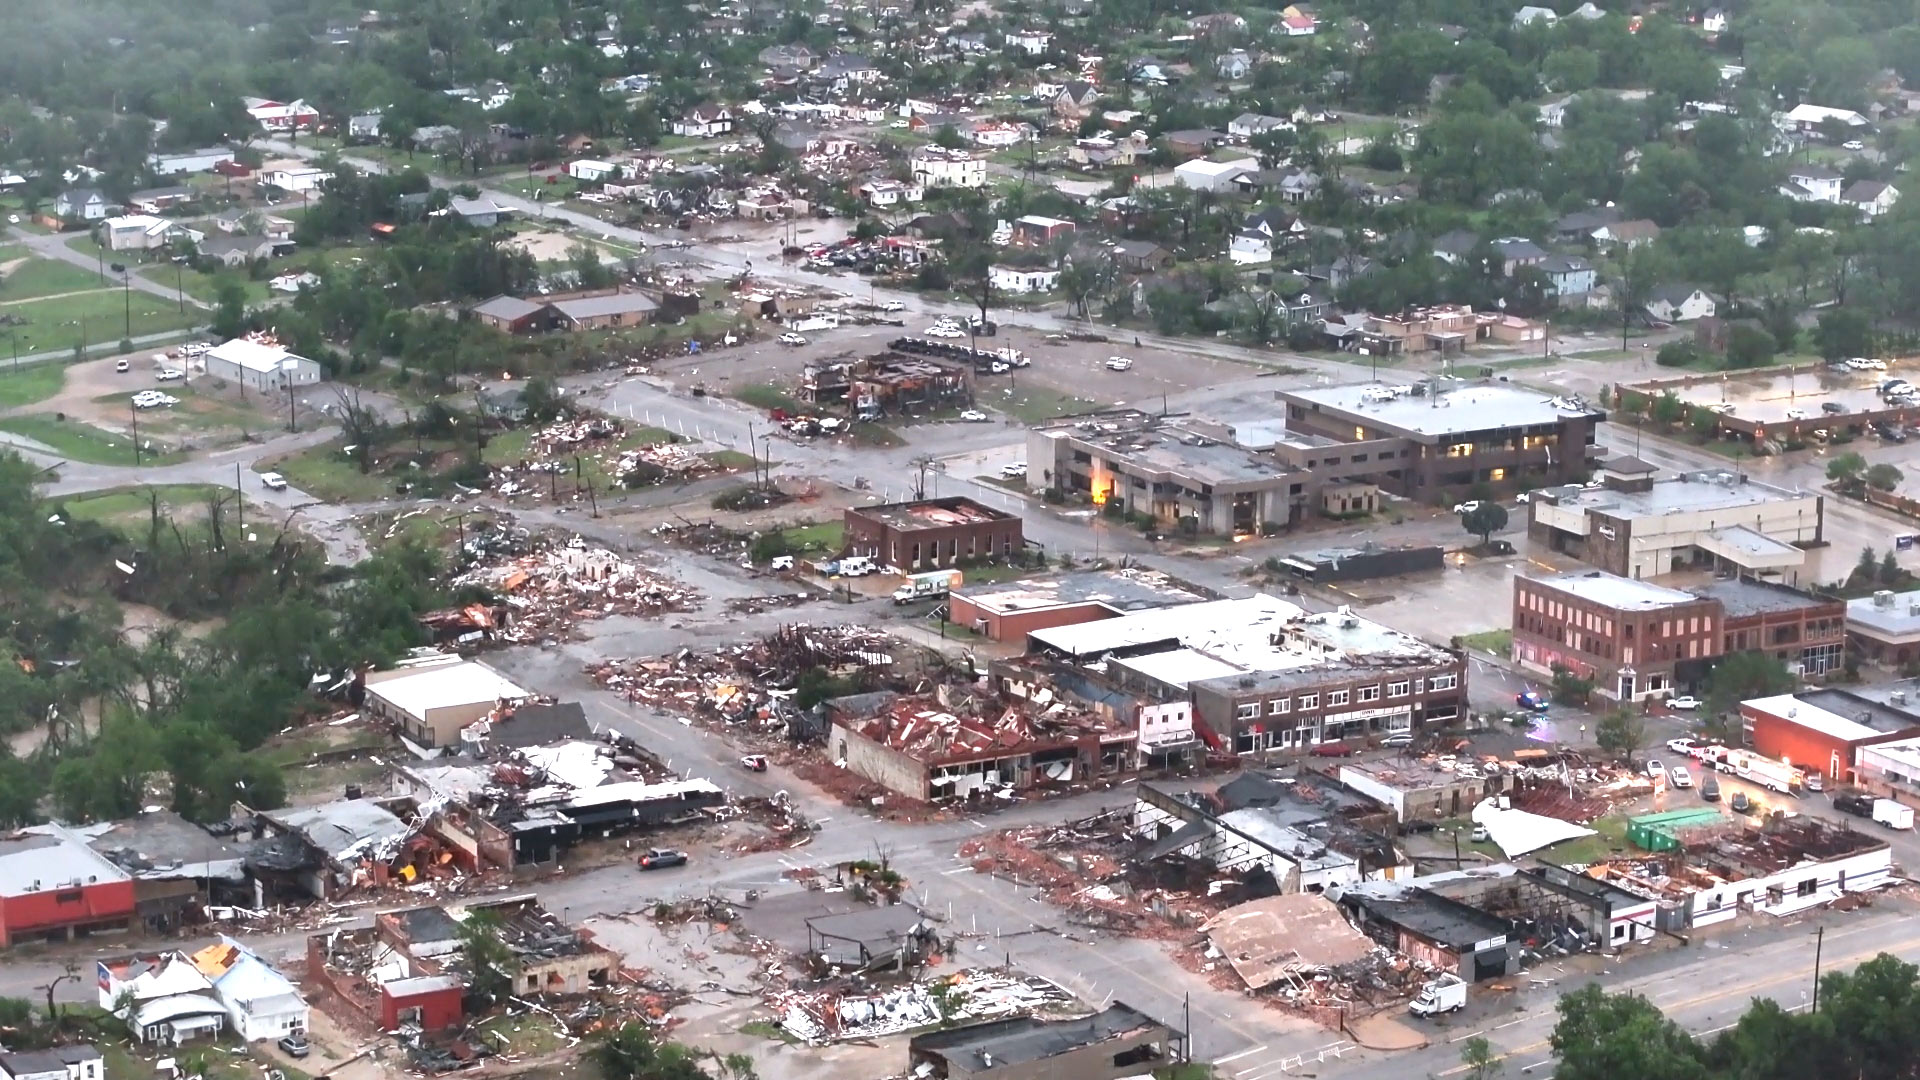 Aerial drone view showing the path of tornado destruction through Sulphur, Oklahoma.